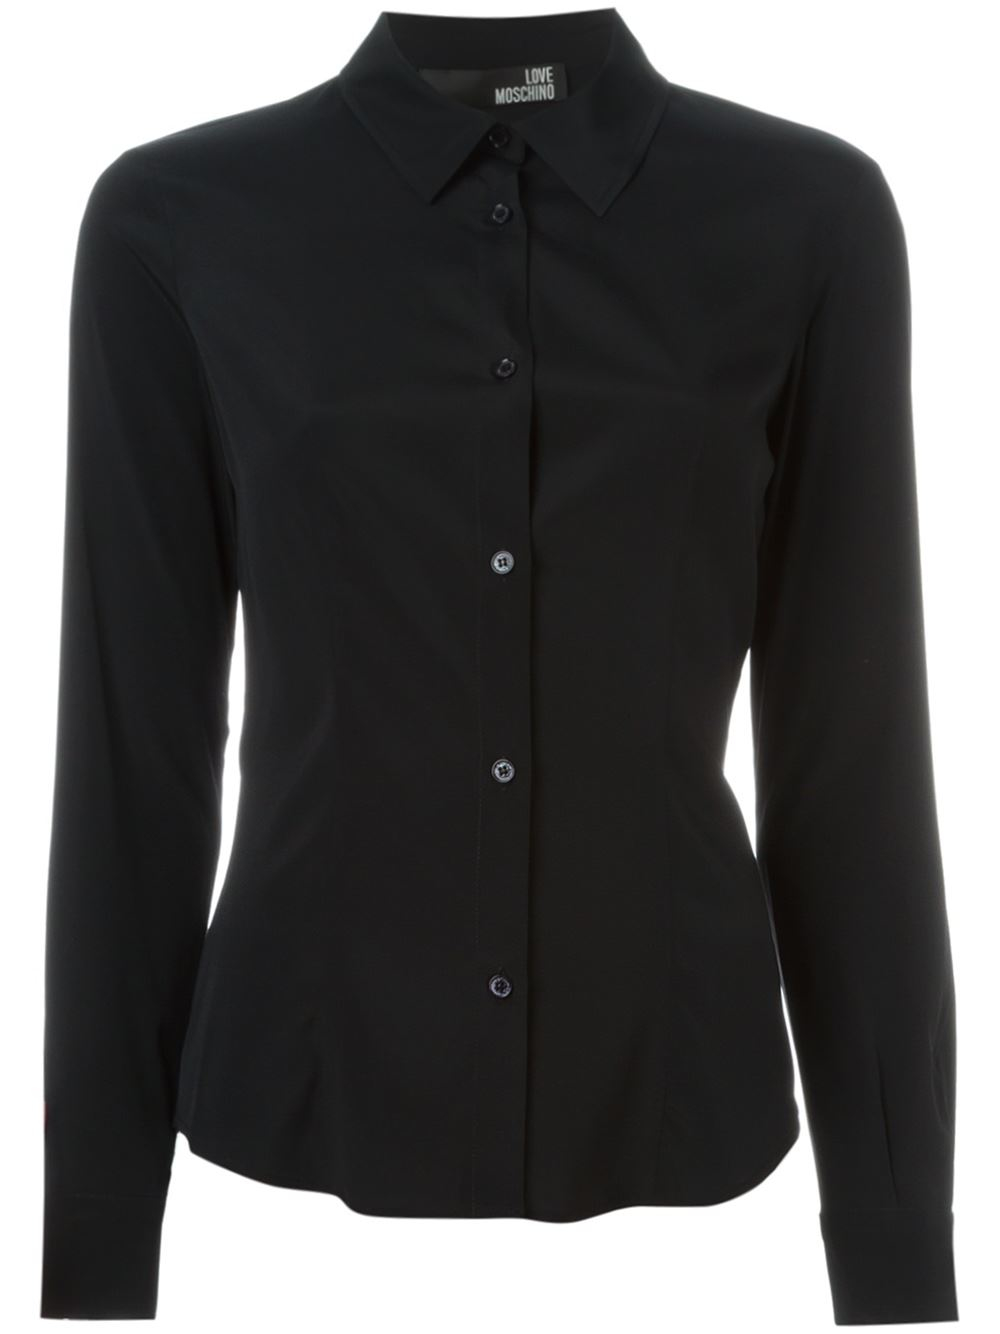 Lyst - Love Moschino Cutaway Collar Shirt in Black